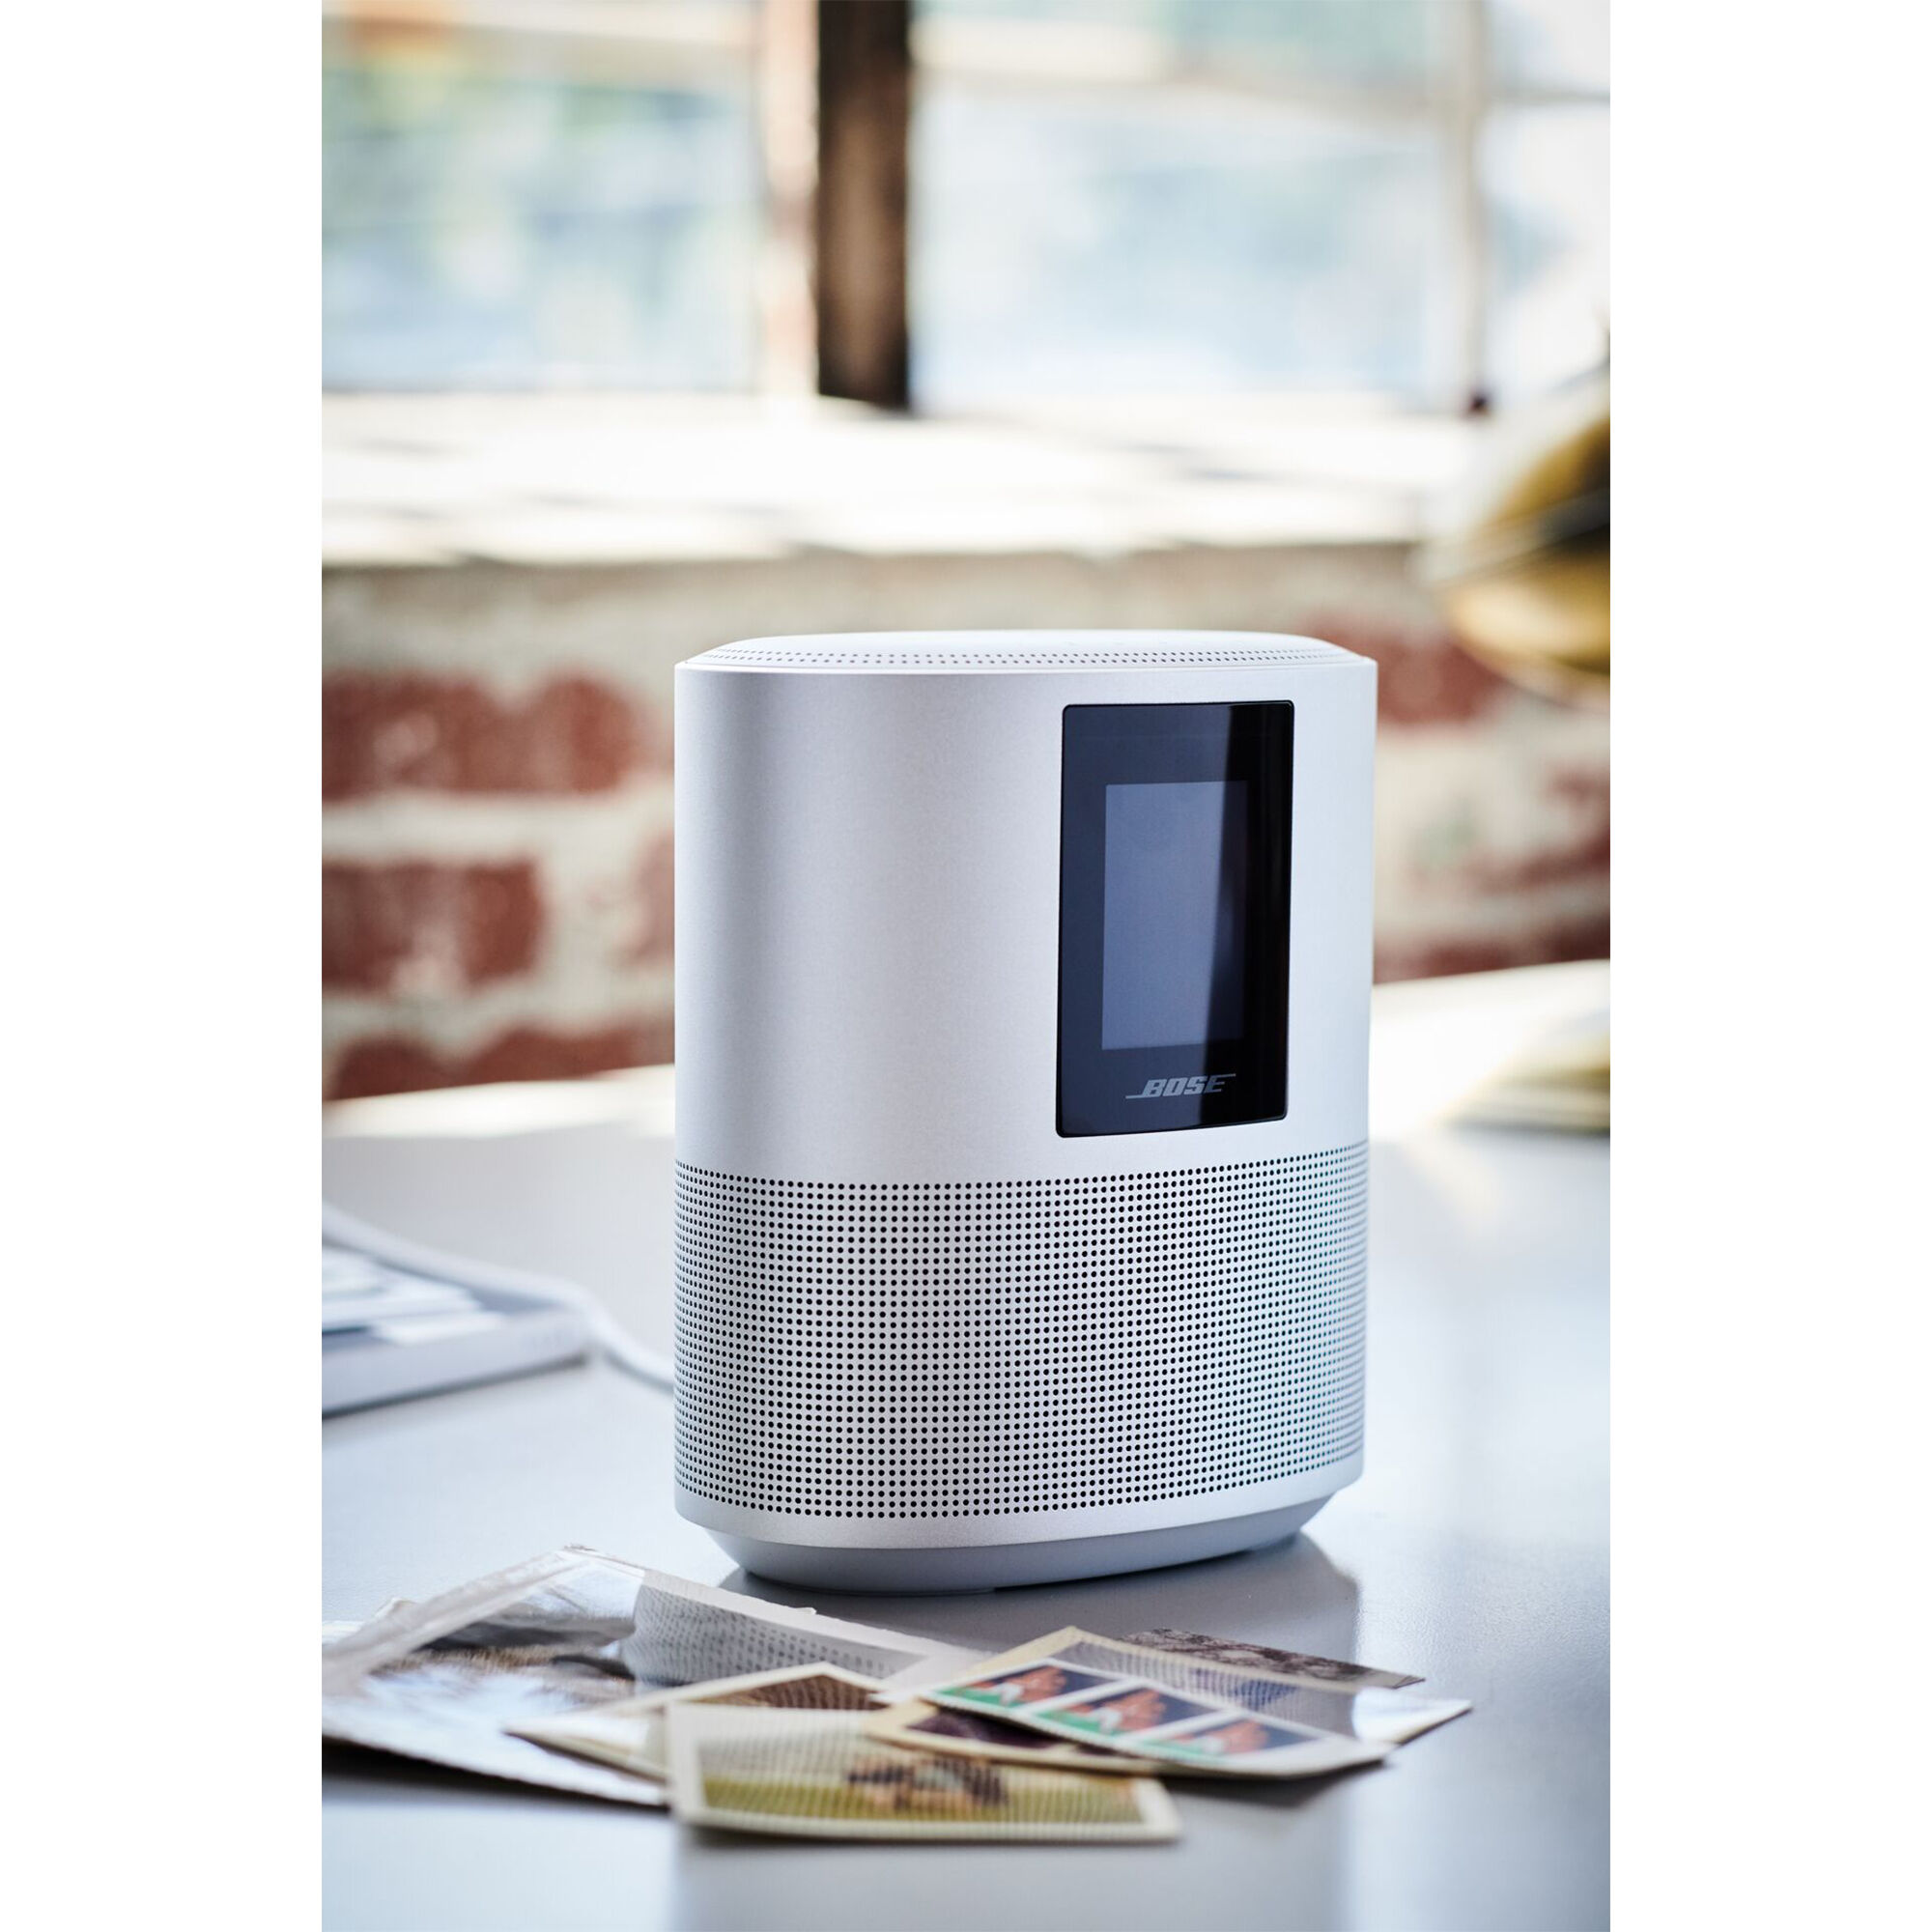 Bose Home Speaker 500 Wi-Fi & Bluetooth Music Streaming Speaker - Silver